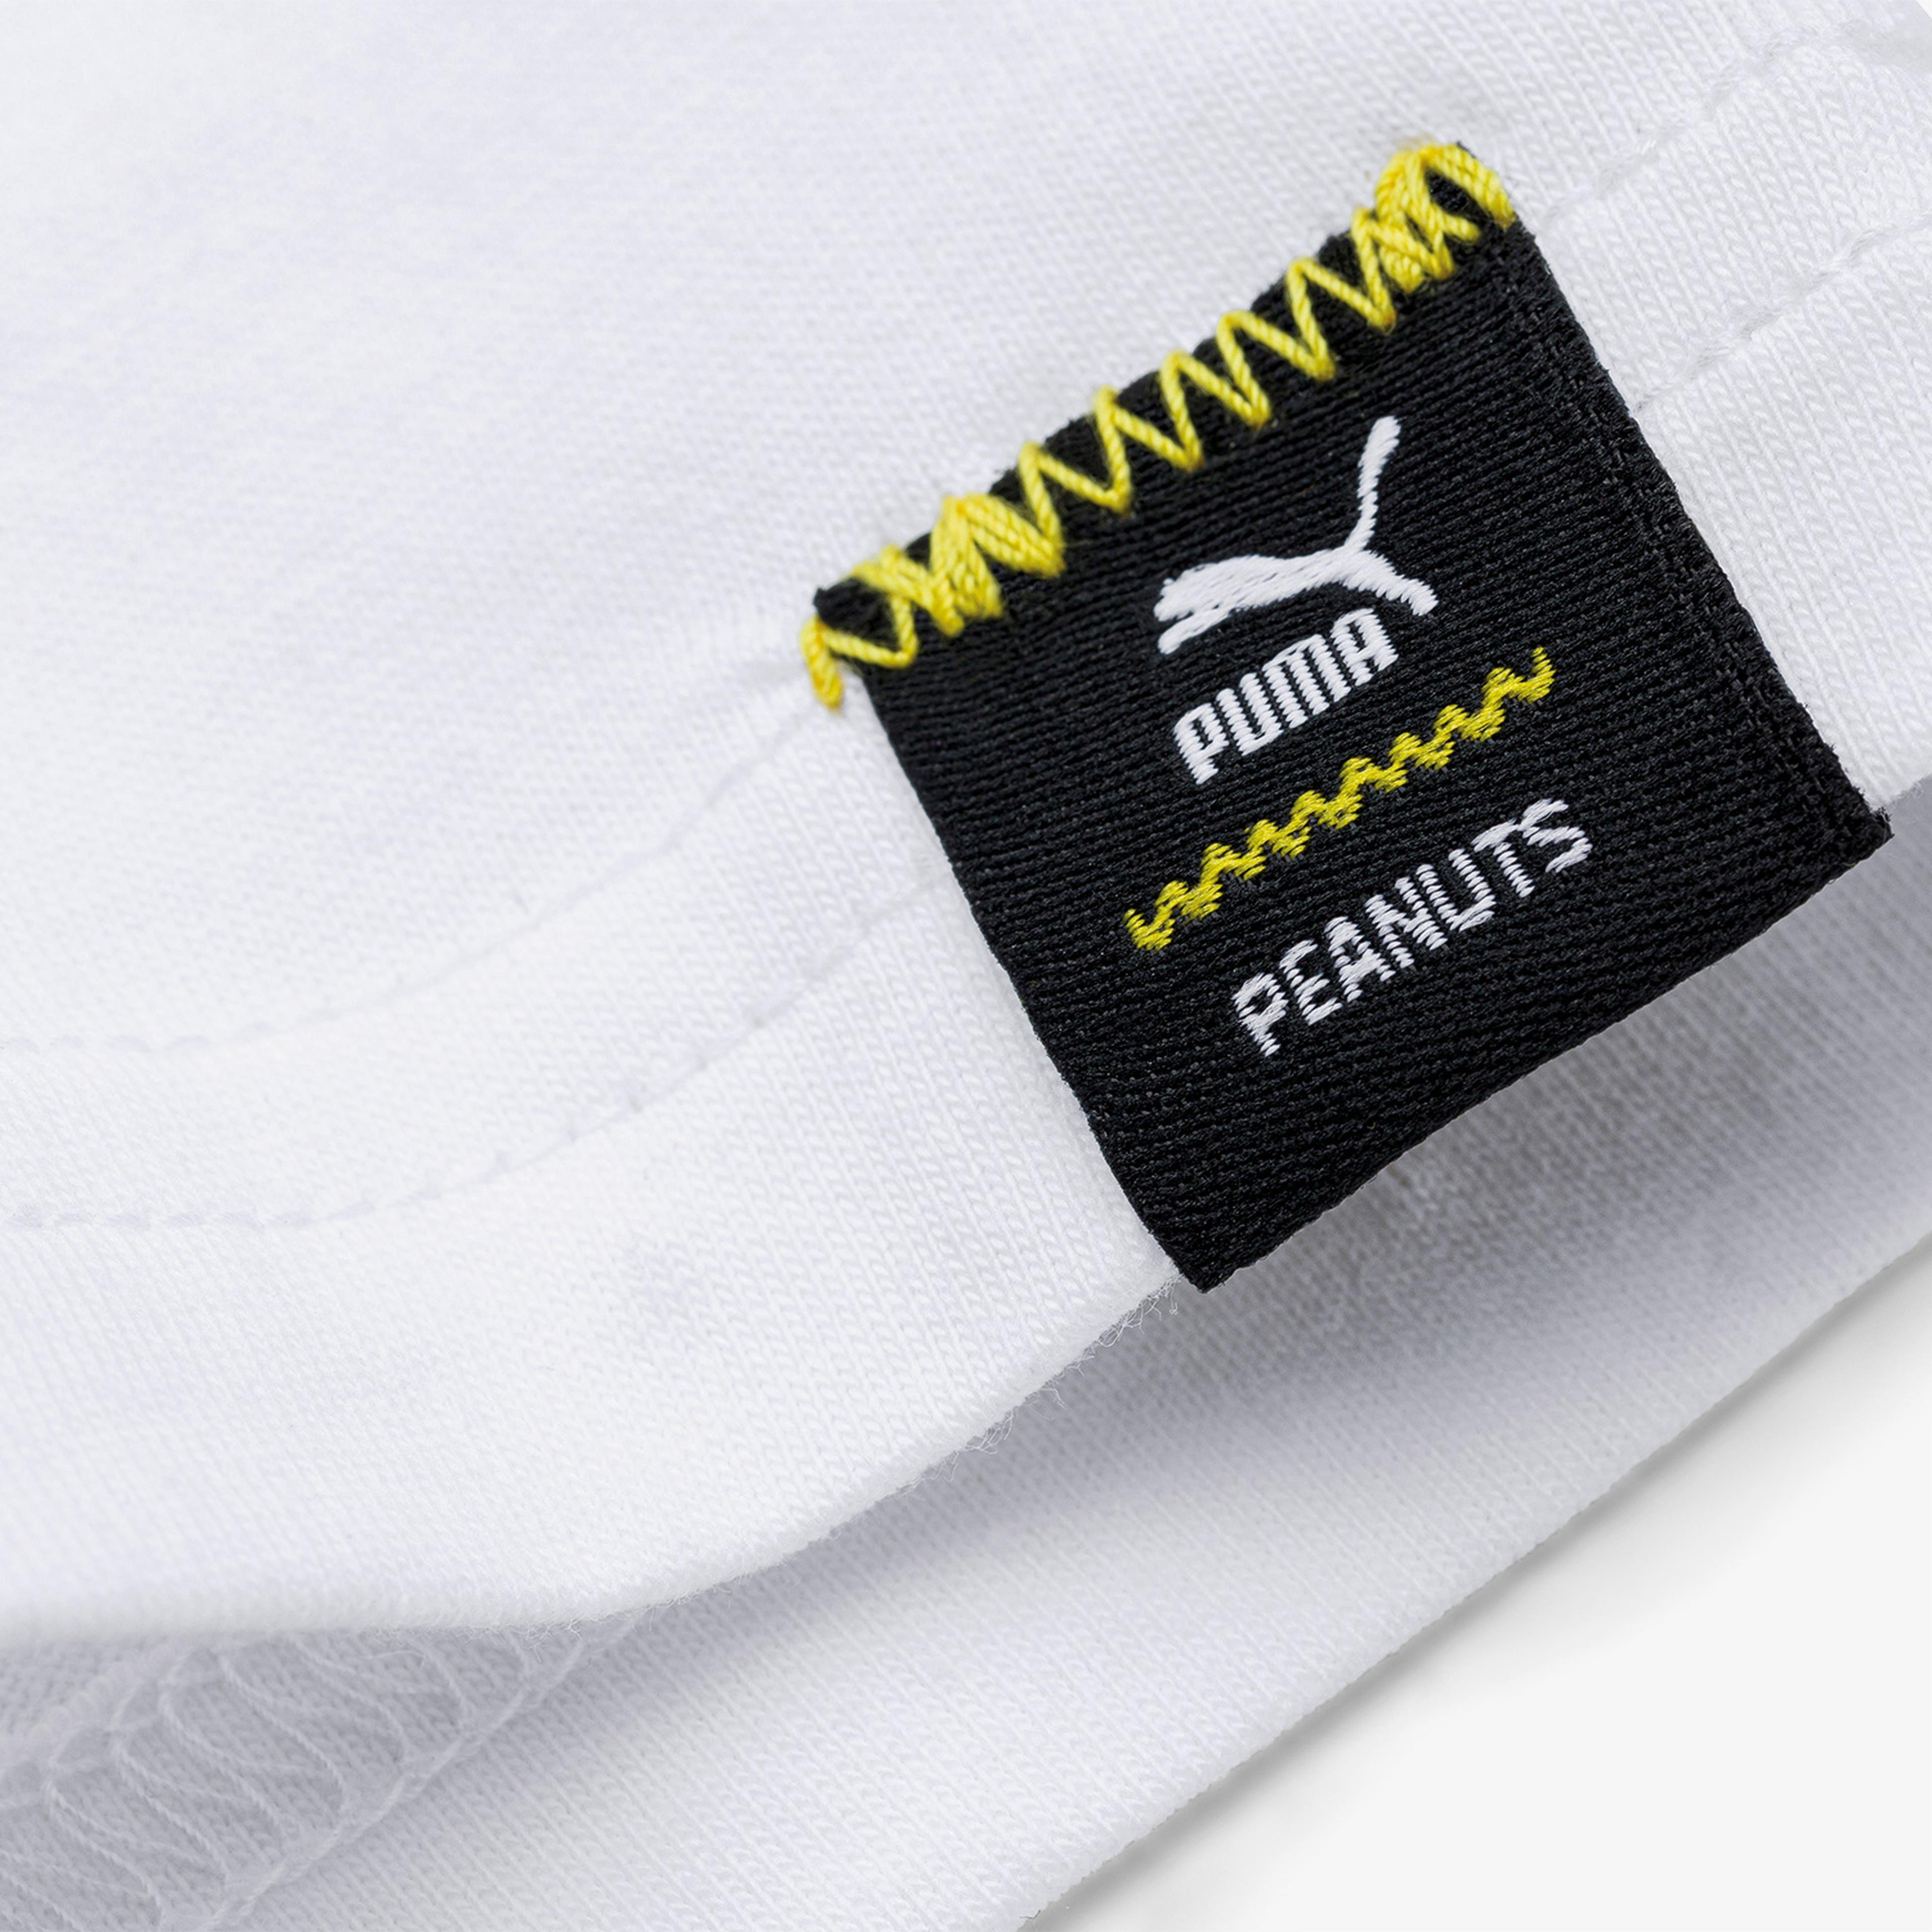 Puma X Peanuts Çocuk Beyaz T-Shirt